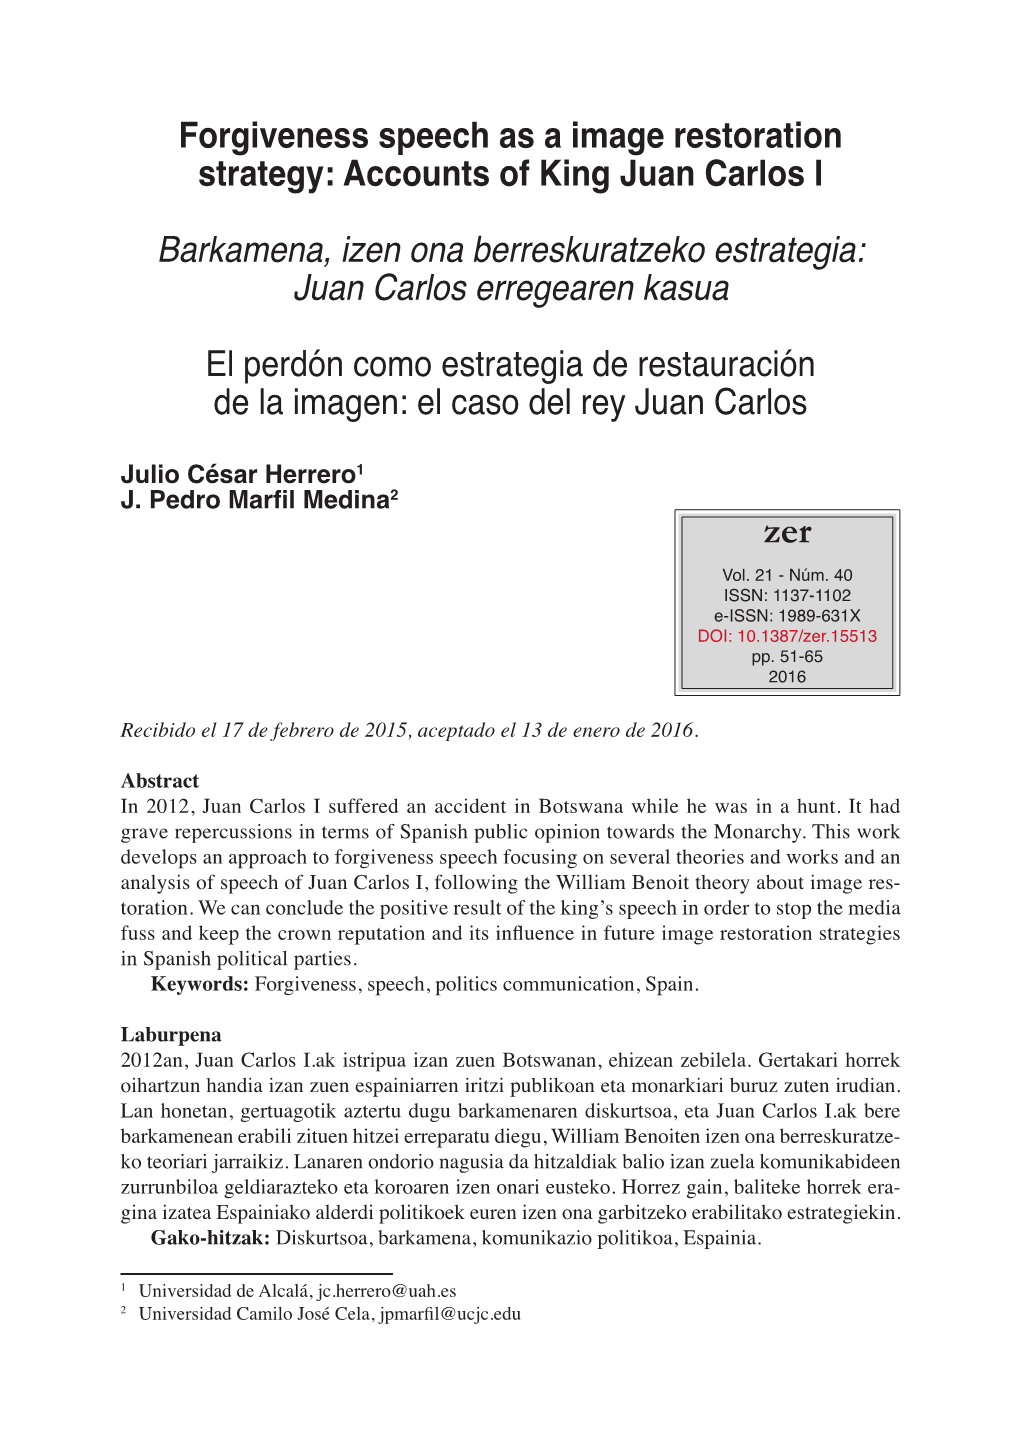 Forgiveness Speech As a Image Restoration Strategy: Accounts of King Juan Carlos I